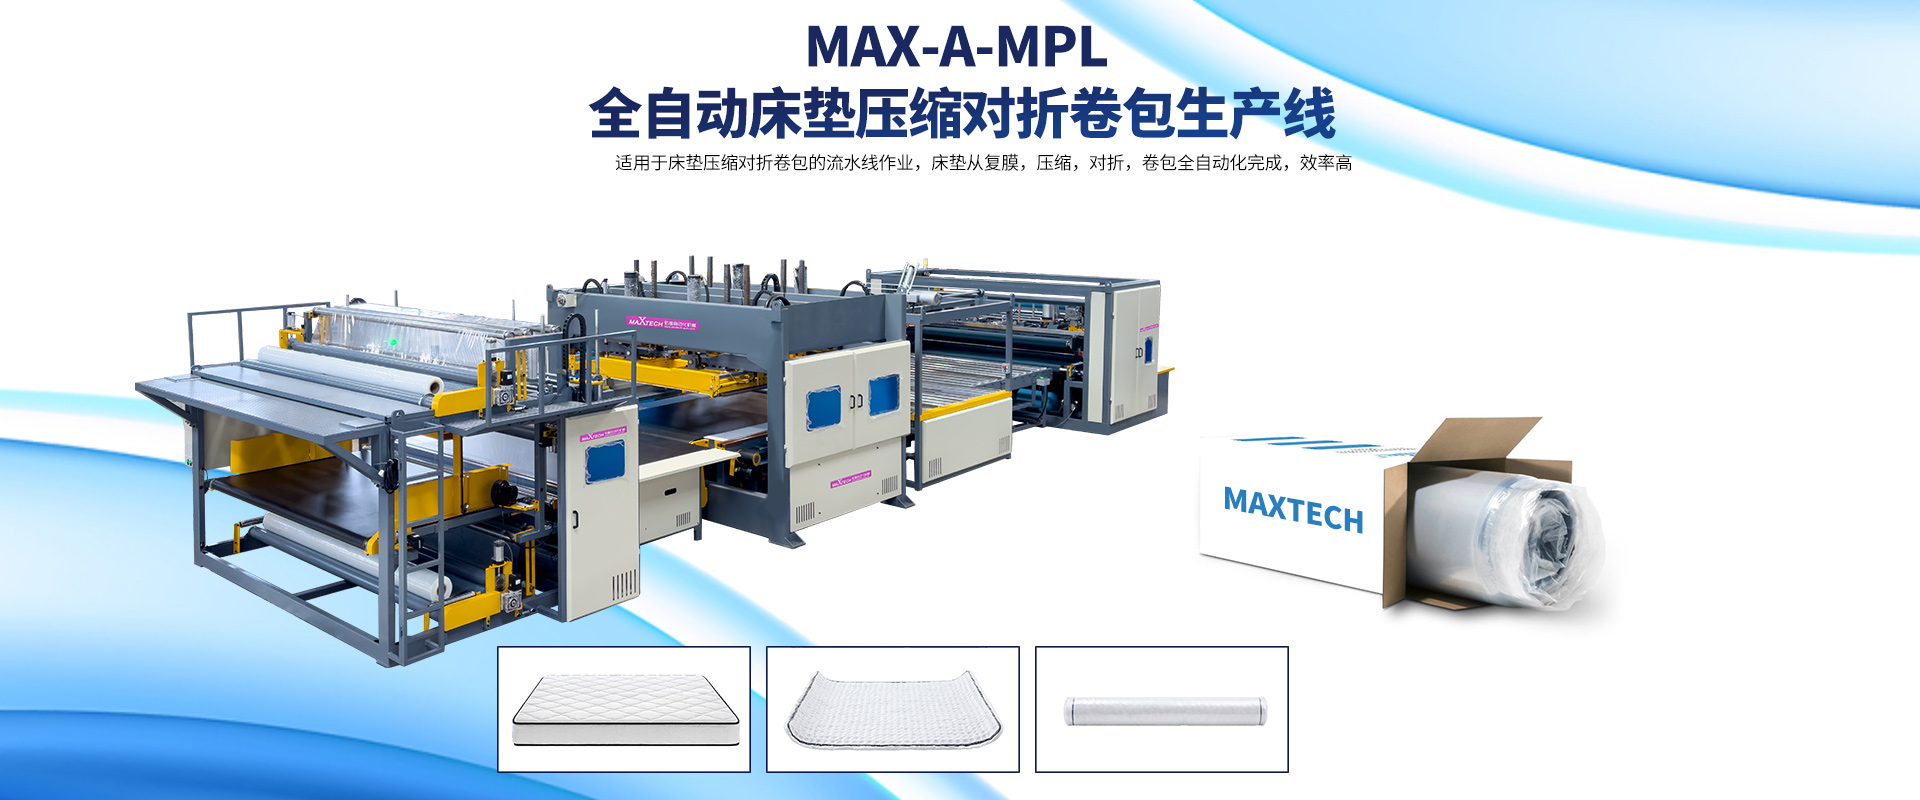 MAX-A-MPL Auto Mattress Packing Line